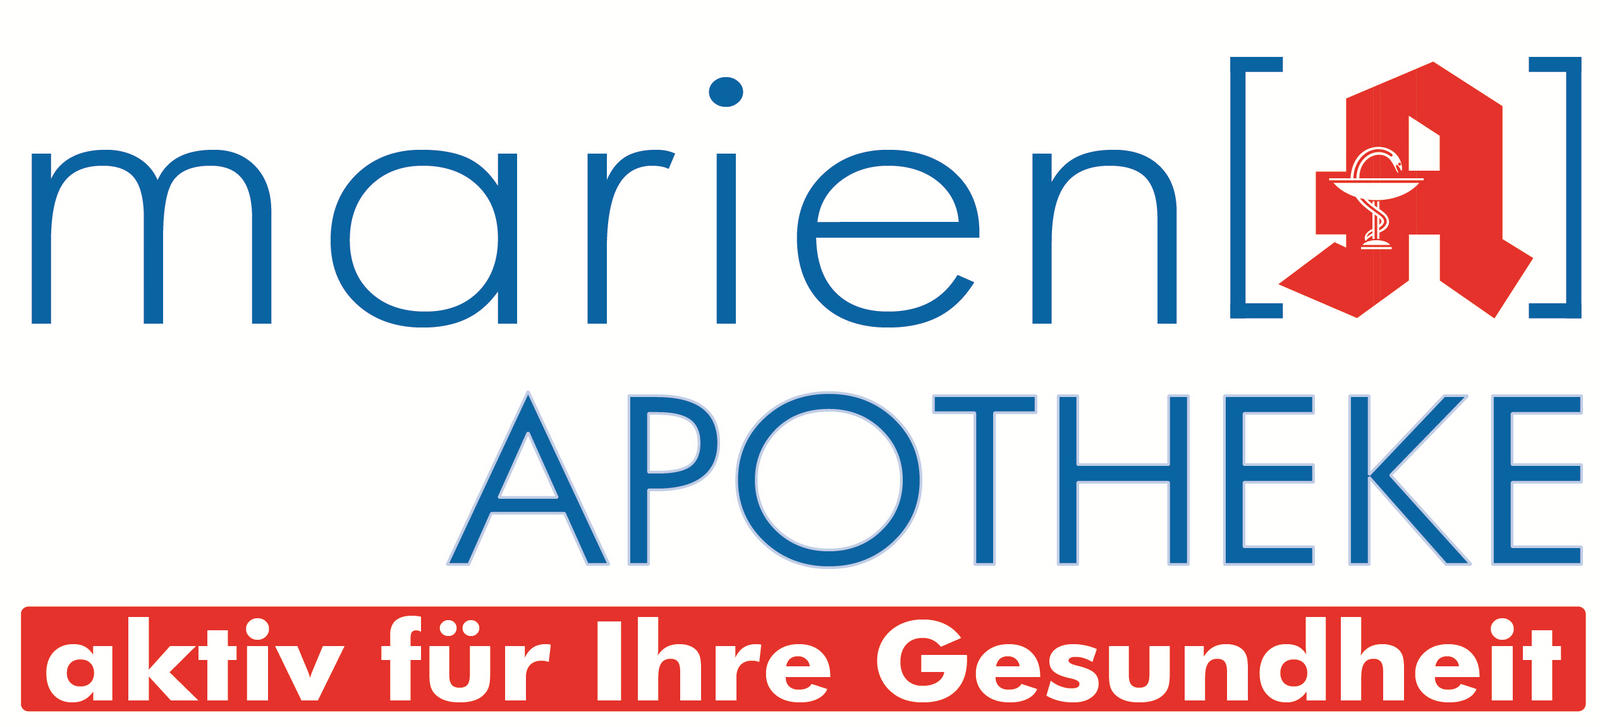 Logo der Marien-Apotheke Dr. Michael Göring e.K.